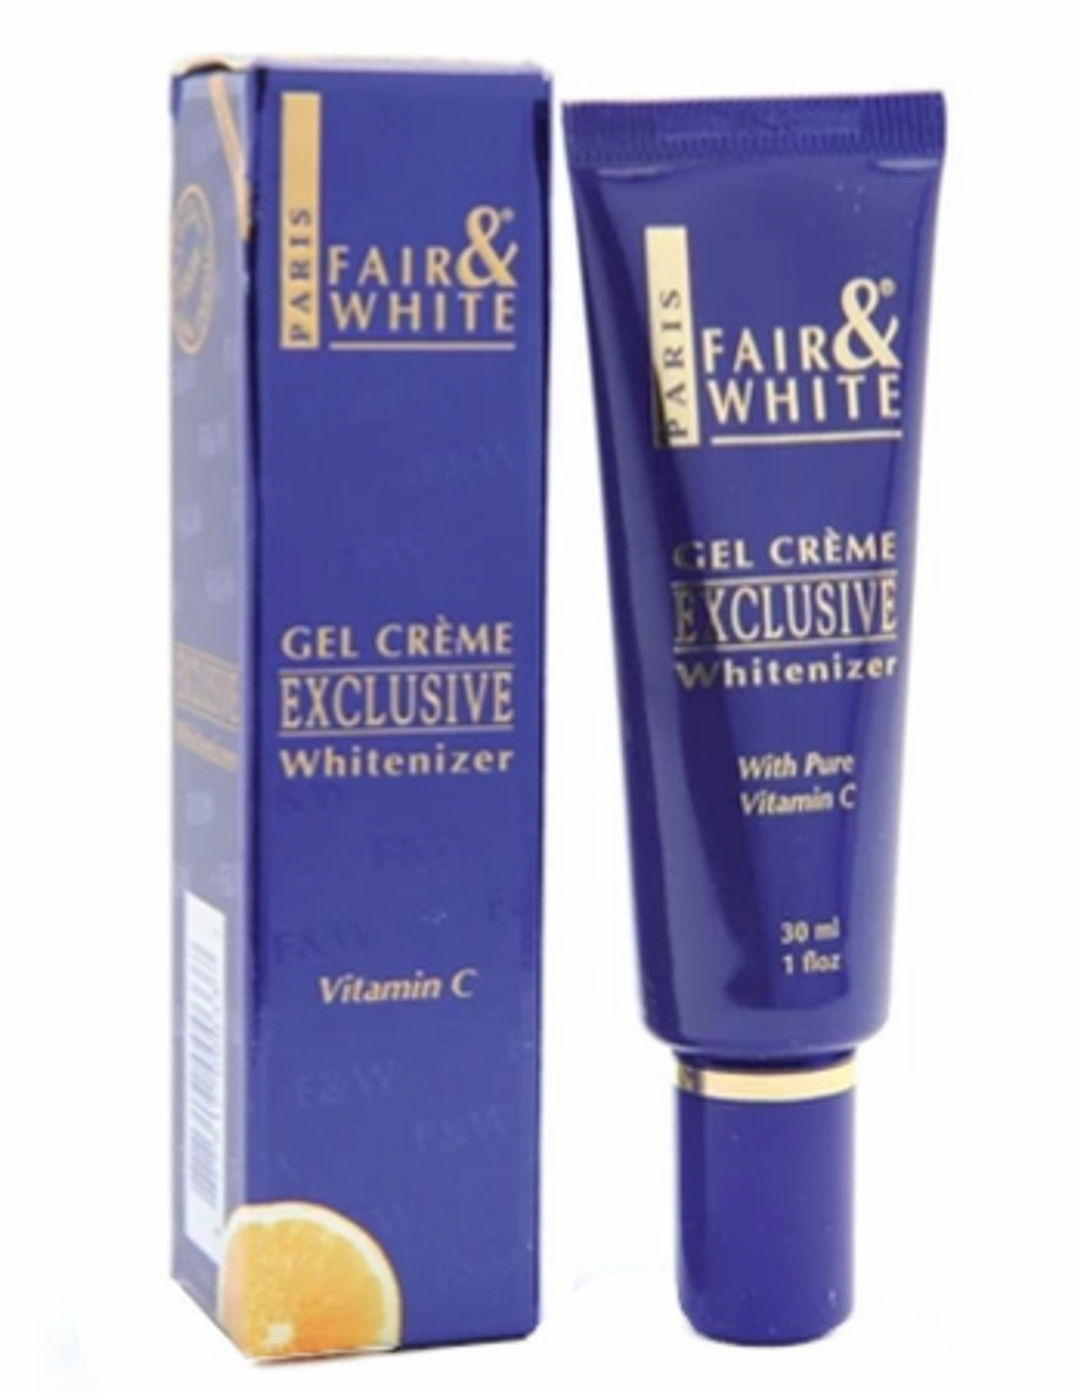 Fair & White Exclusive Whitenizer Gel Cream With Vitamin C - 30ml